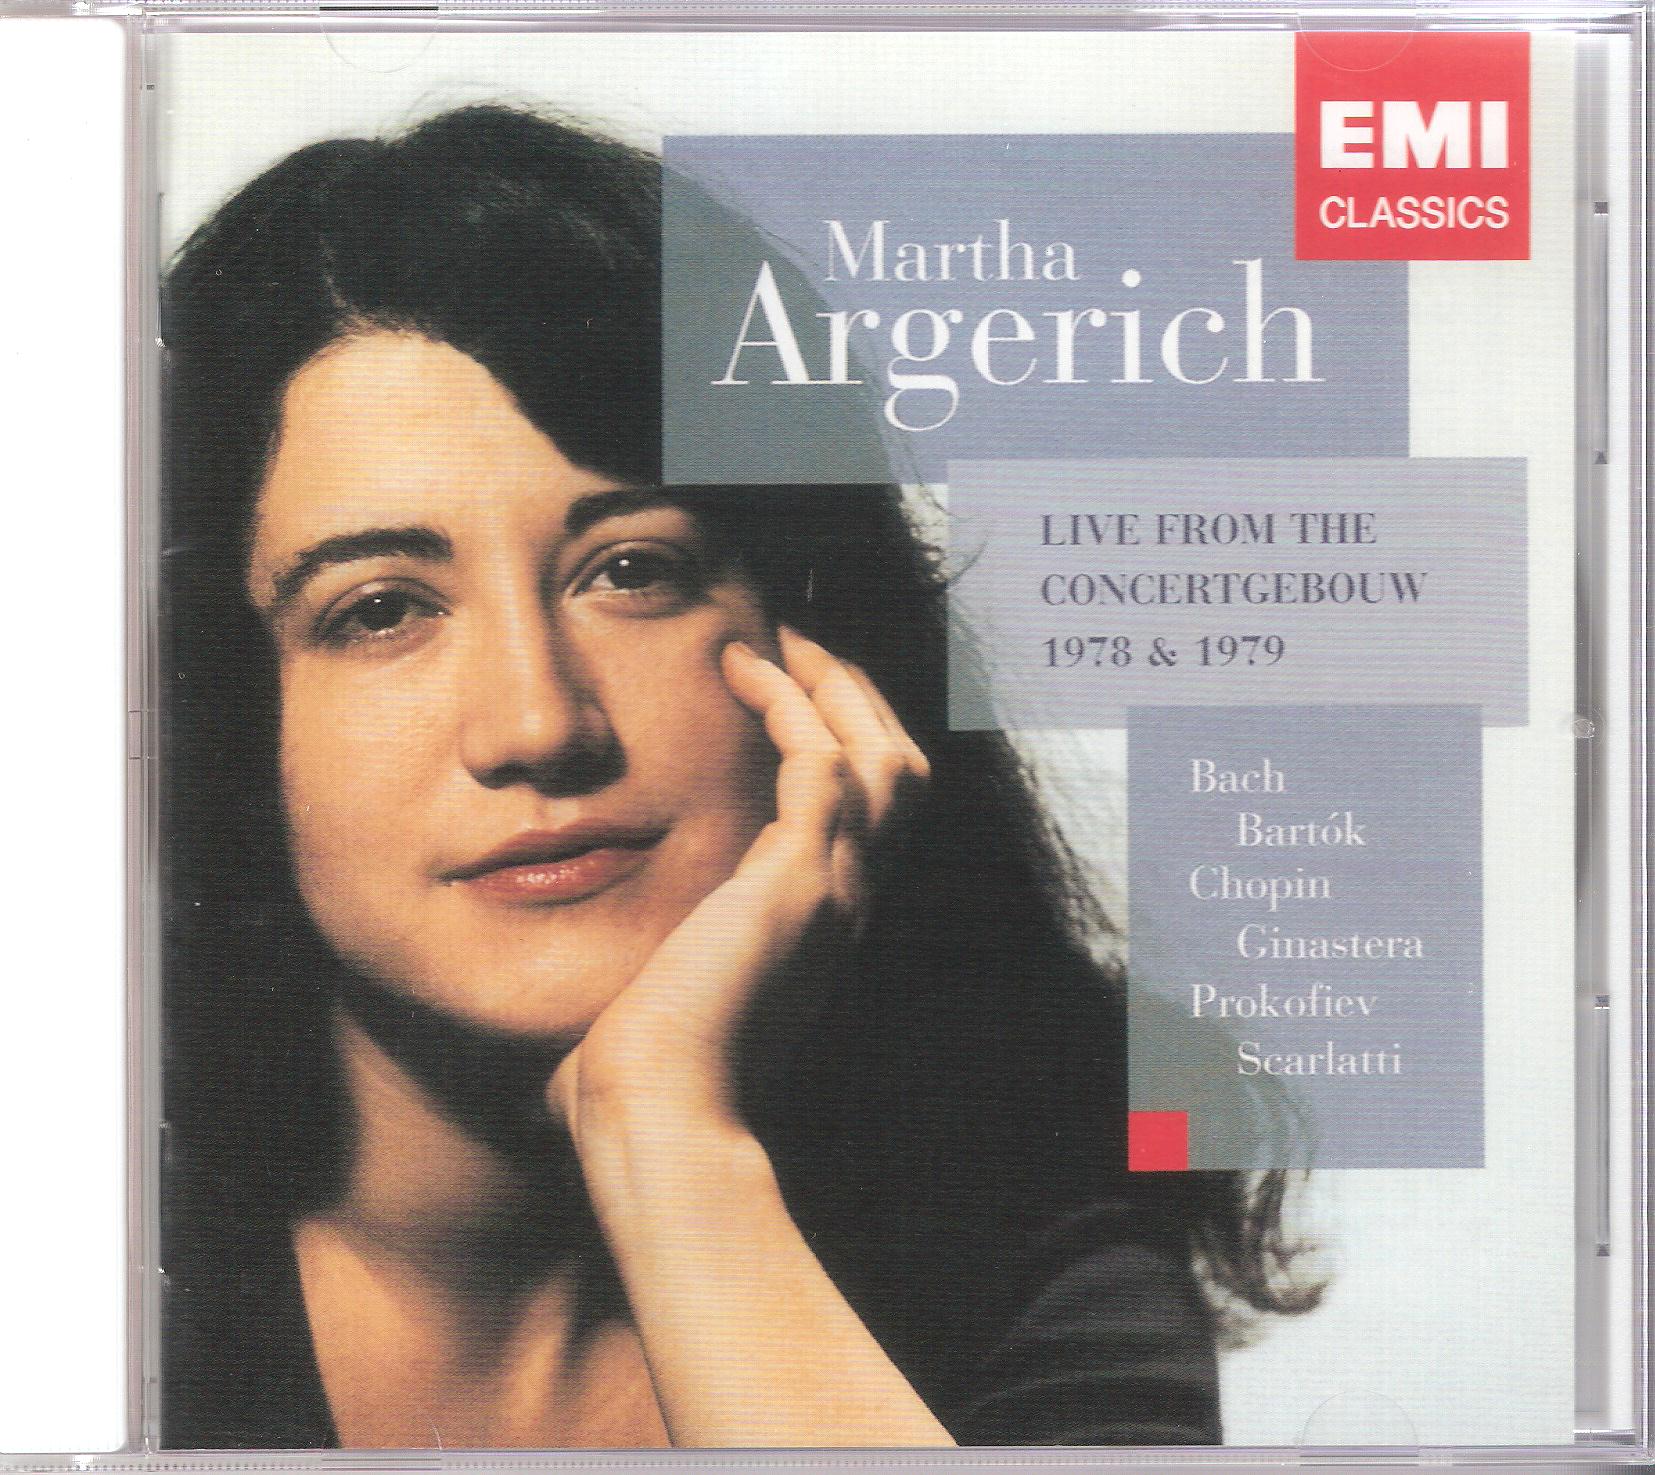 Martha Argerich - Live form the Concertgebouw 1978 & 1979 (2011) SACD ISO